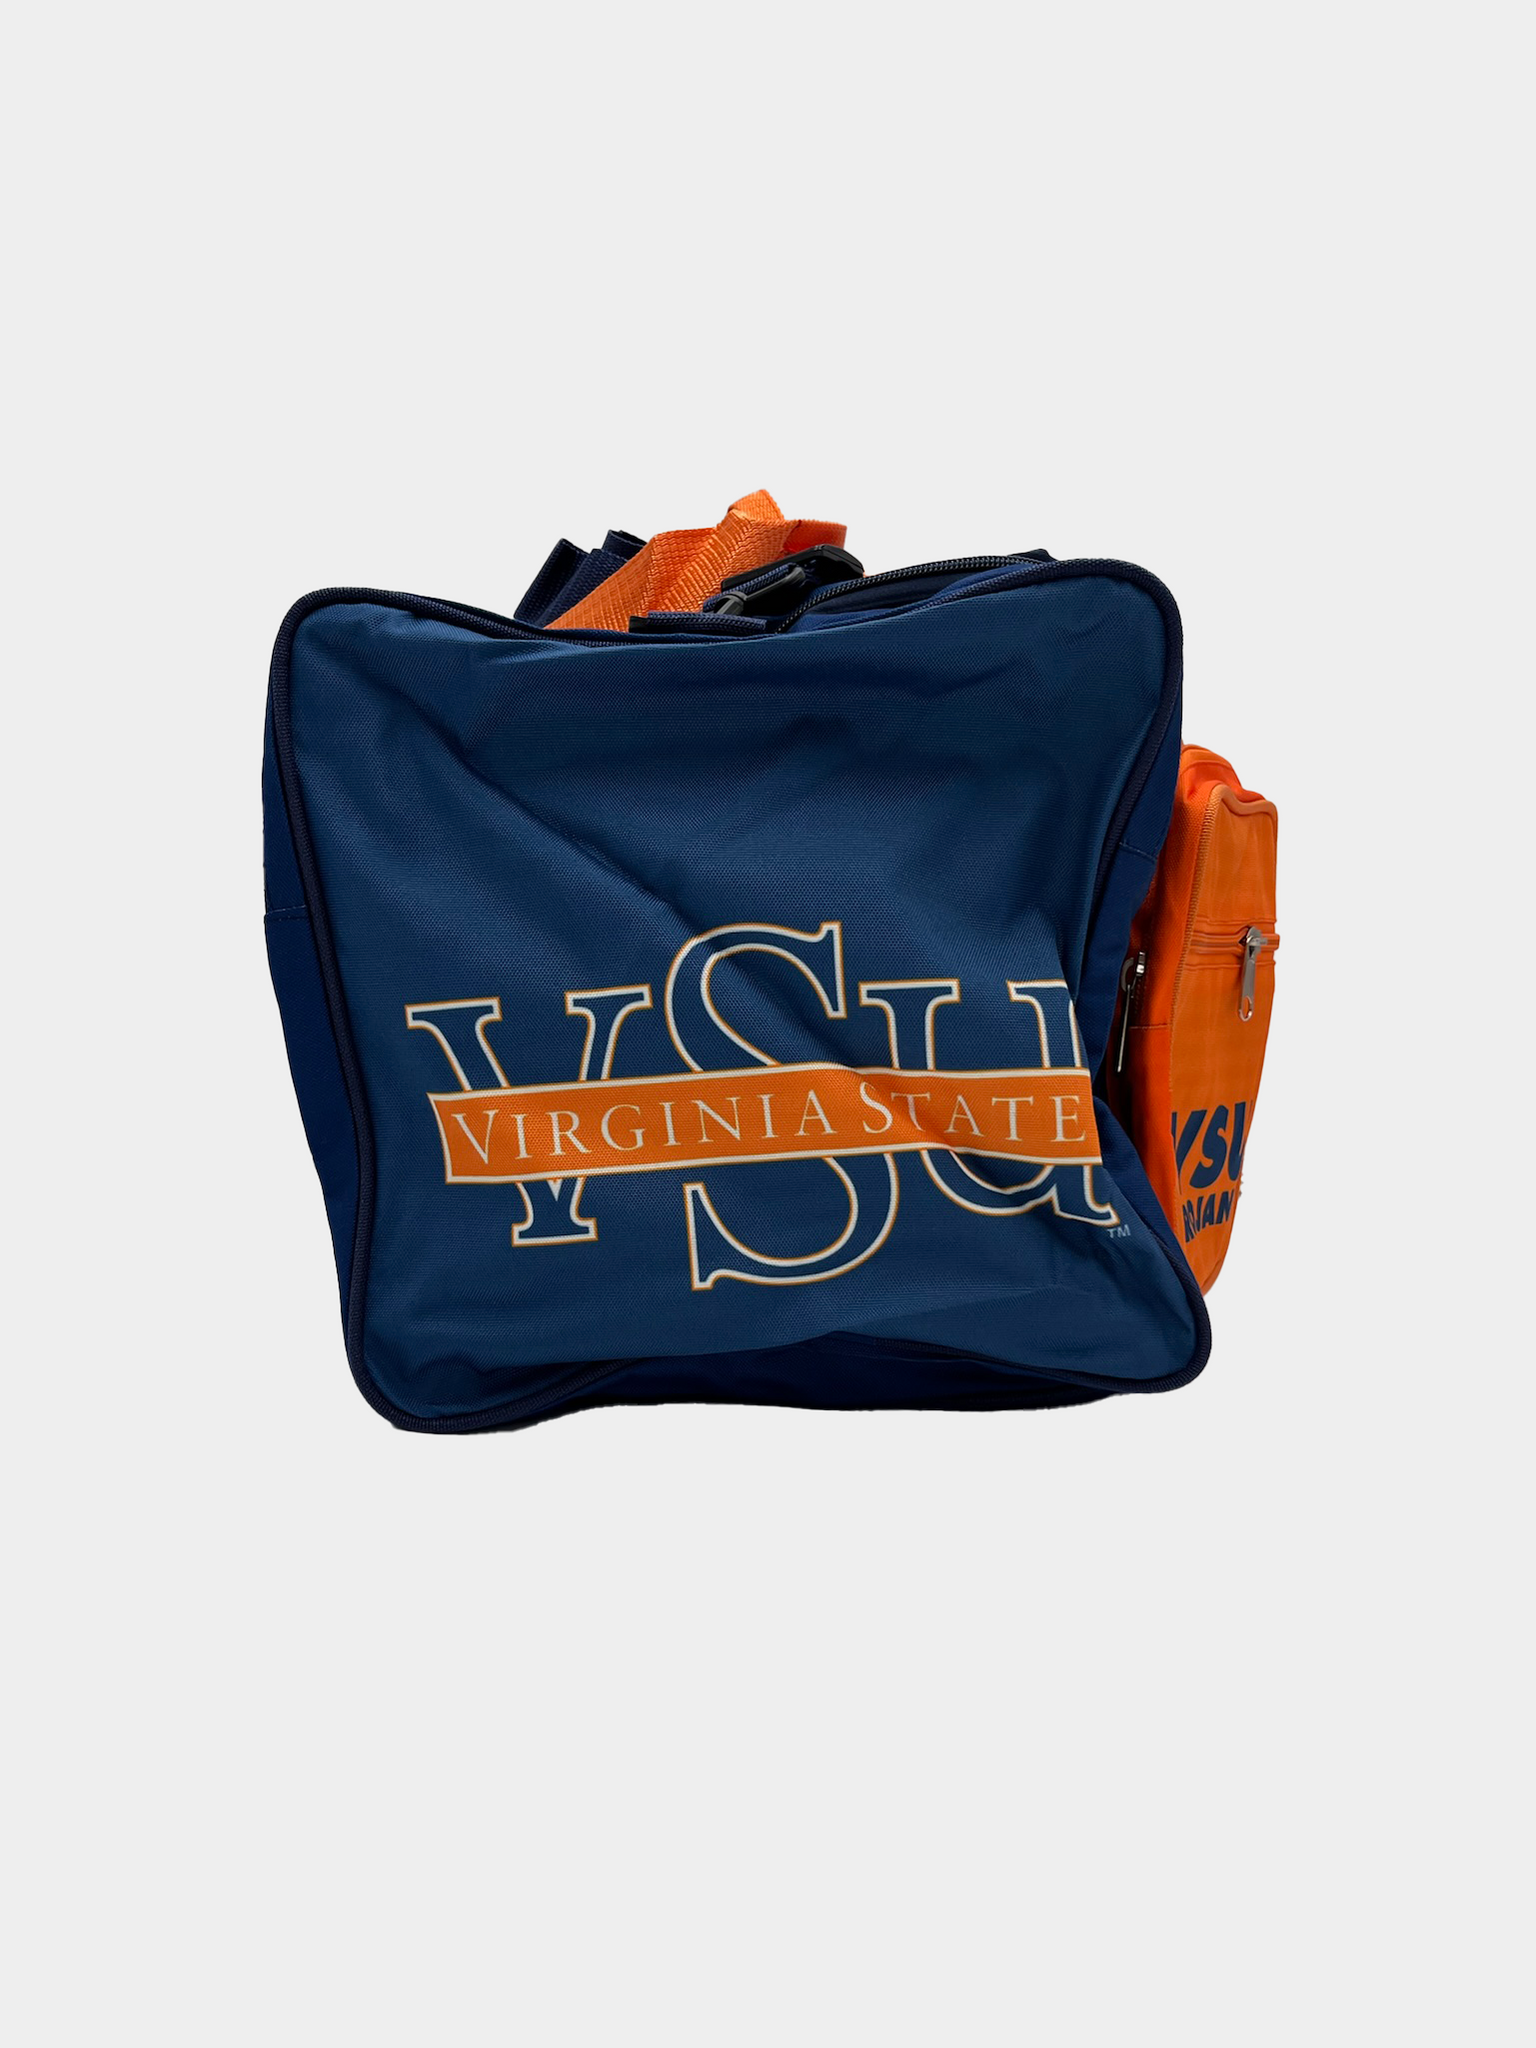 VSU Duffle Bag